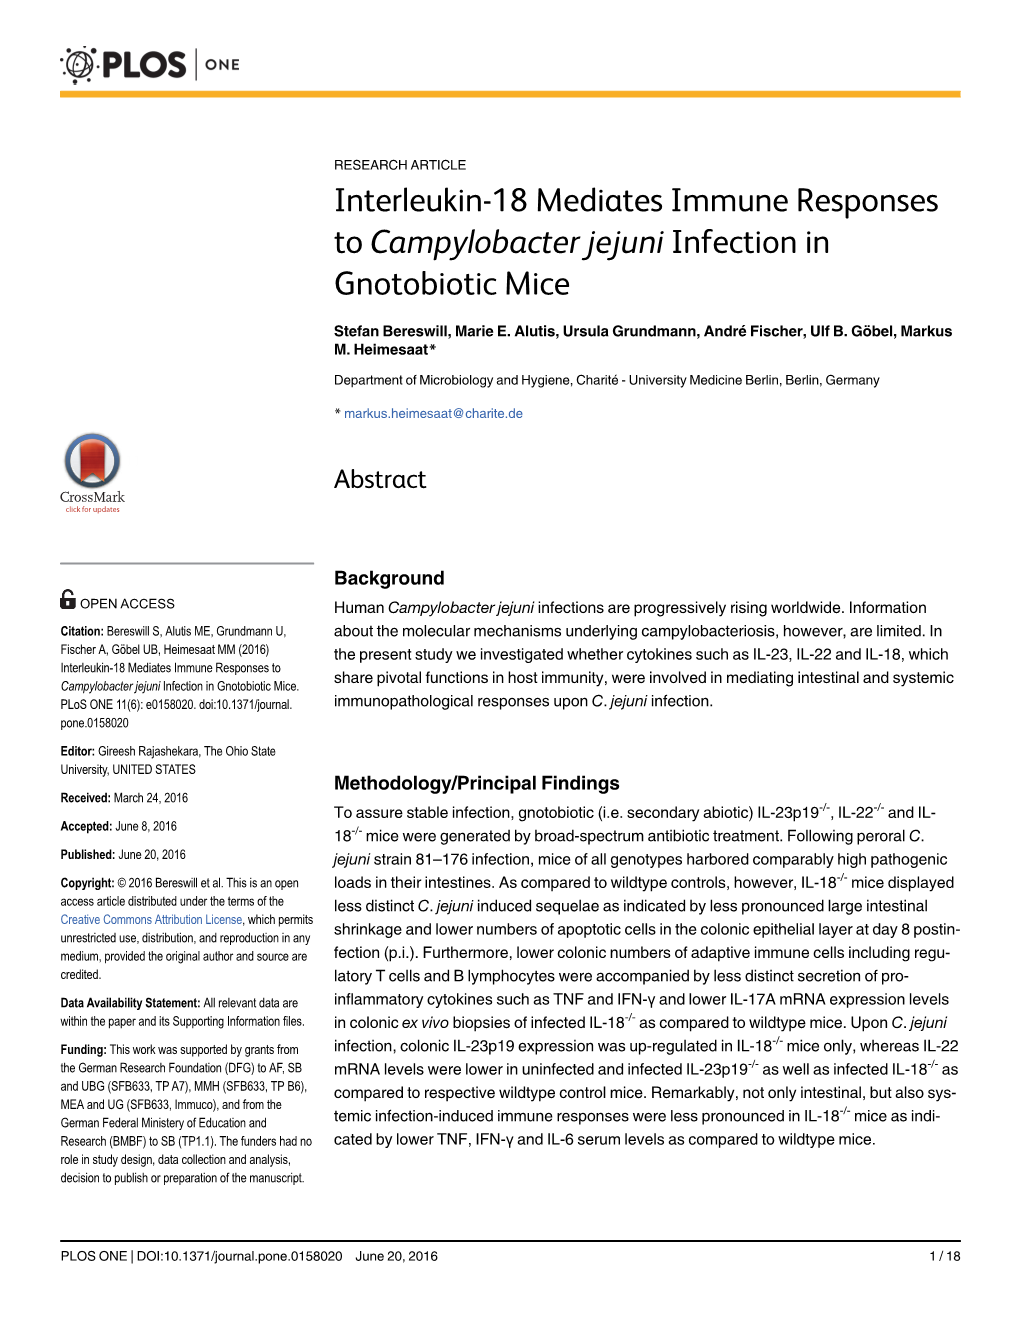 Interleukin-18 Mediates Immune Responses to Campylobacter Jejuni Infection in Gnotobiotic Mice